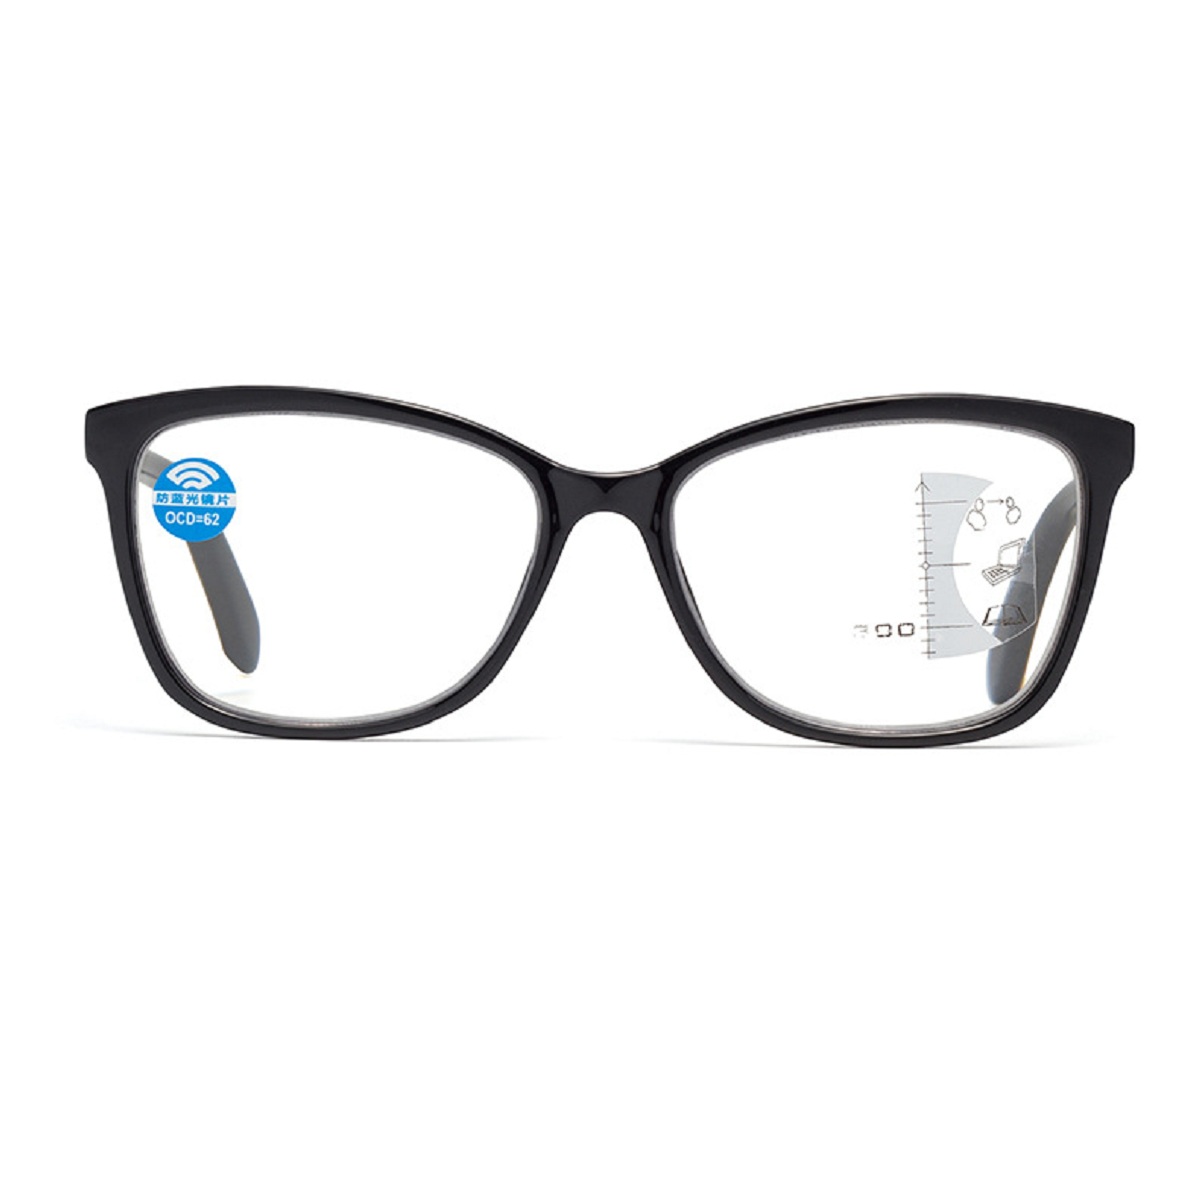 

Presbyopic Glasses Black for Men and Women with Anti blue light Comfortable Resin Presbyopic Glasses Reading Glasses Pro